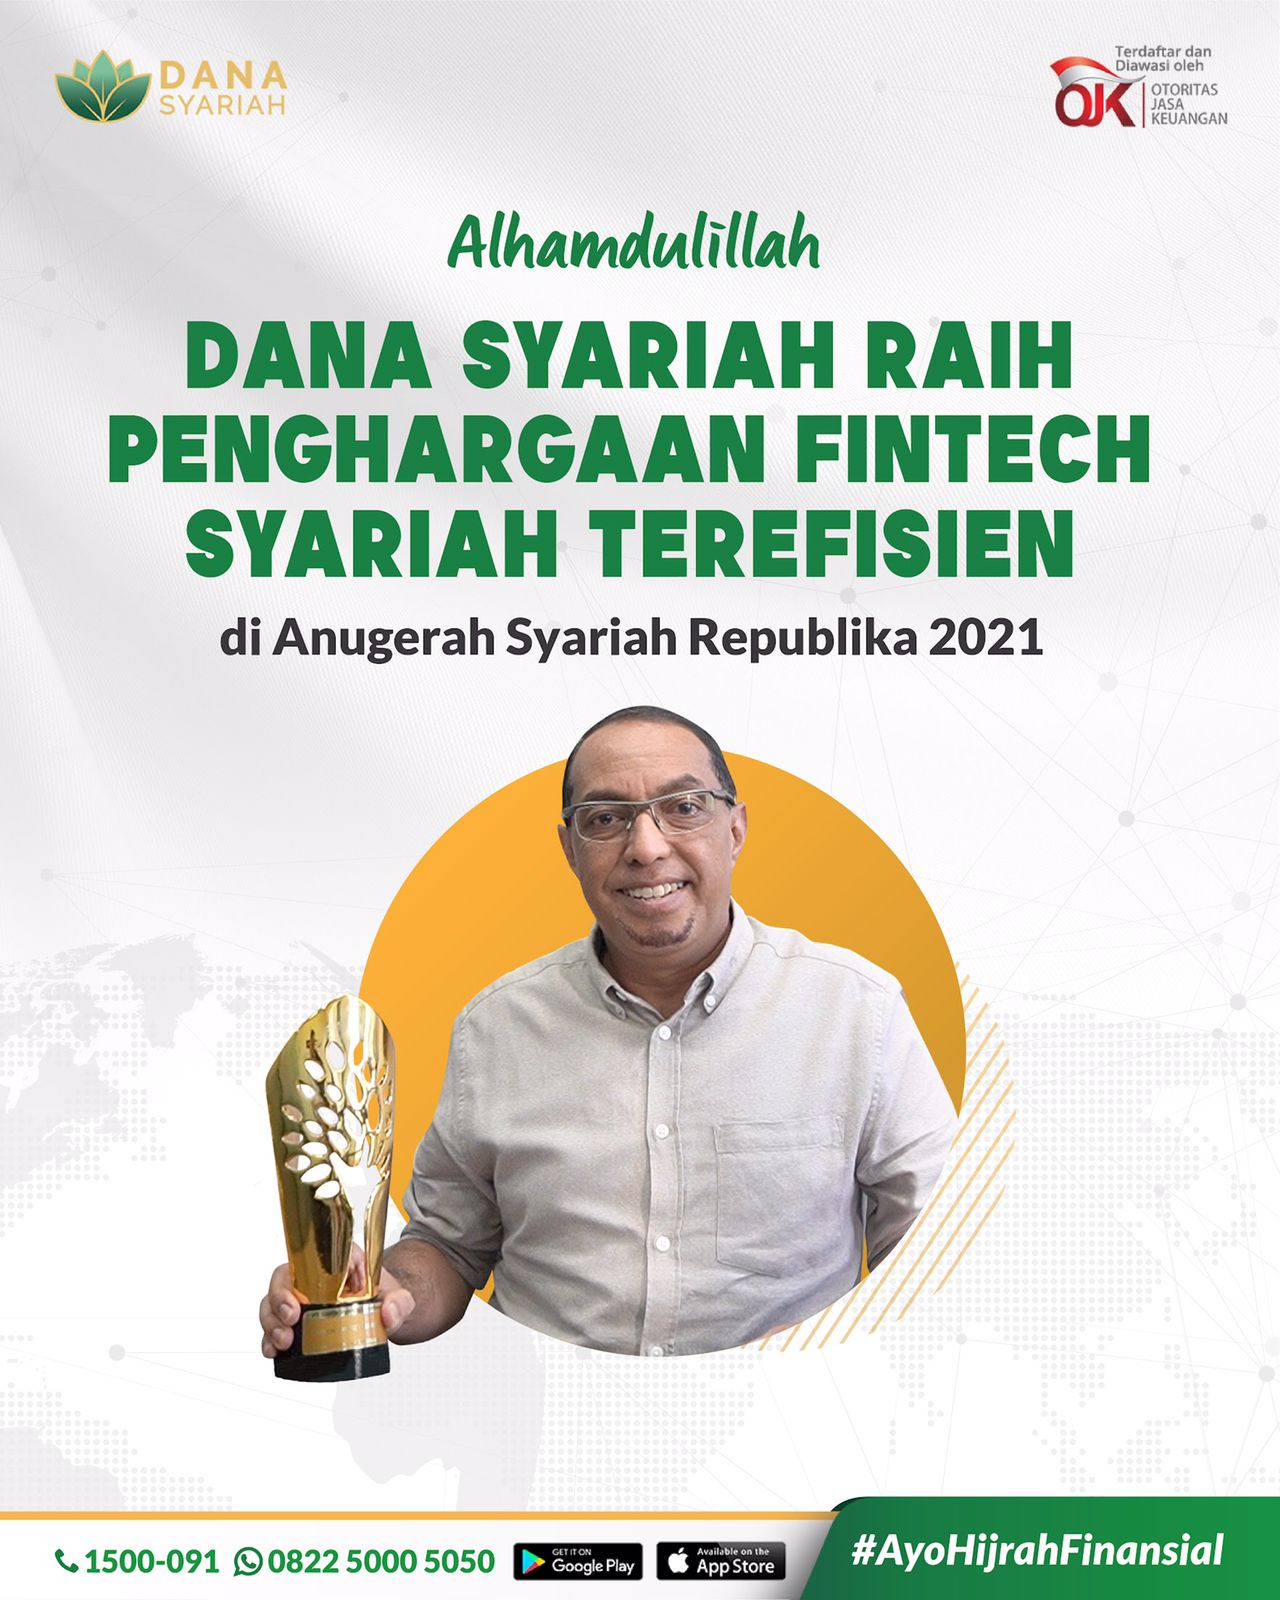 Dana Syariah Alhamdulillah, Dana Syariah Meraih Penghargaan Fintech Syariah Ter Efisien Anugerah Syariah Republika 2021!